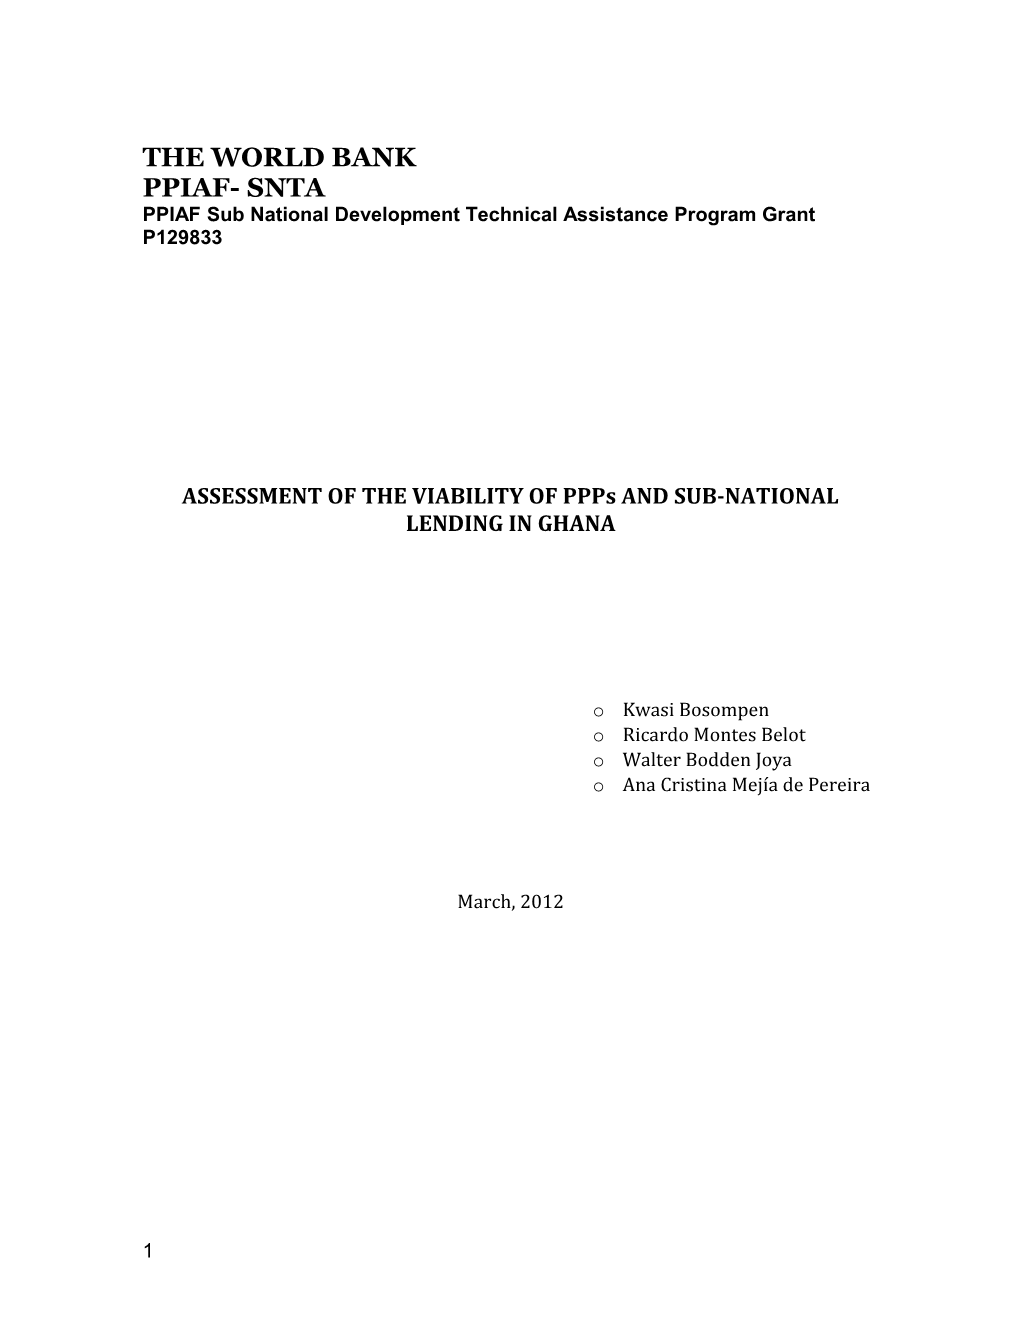 PPIAF Sub National Development Technical Assistance Program Grant P129833